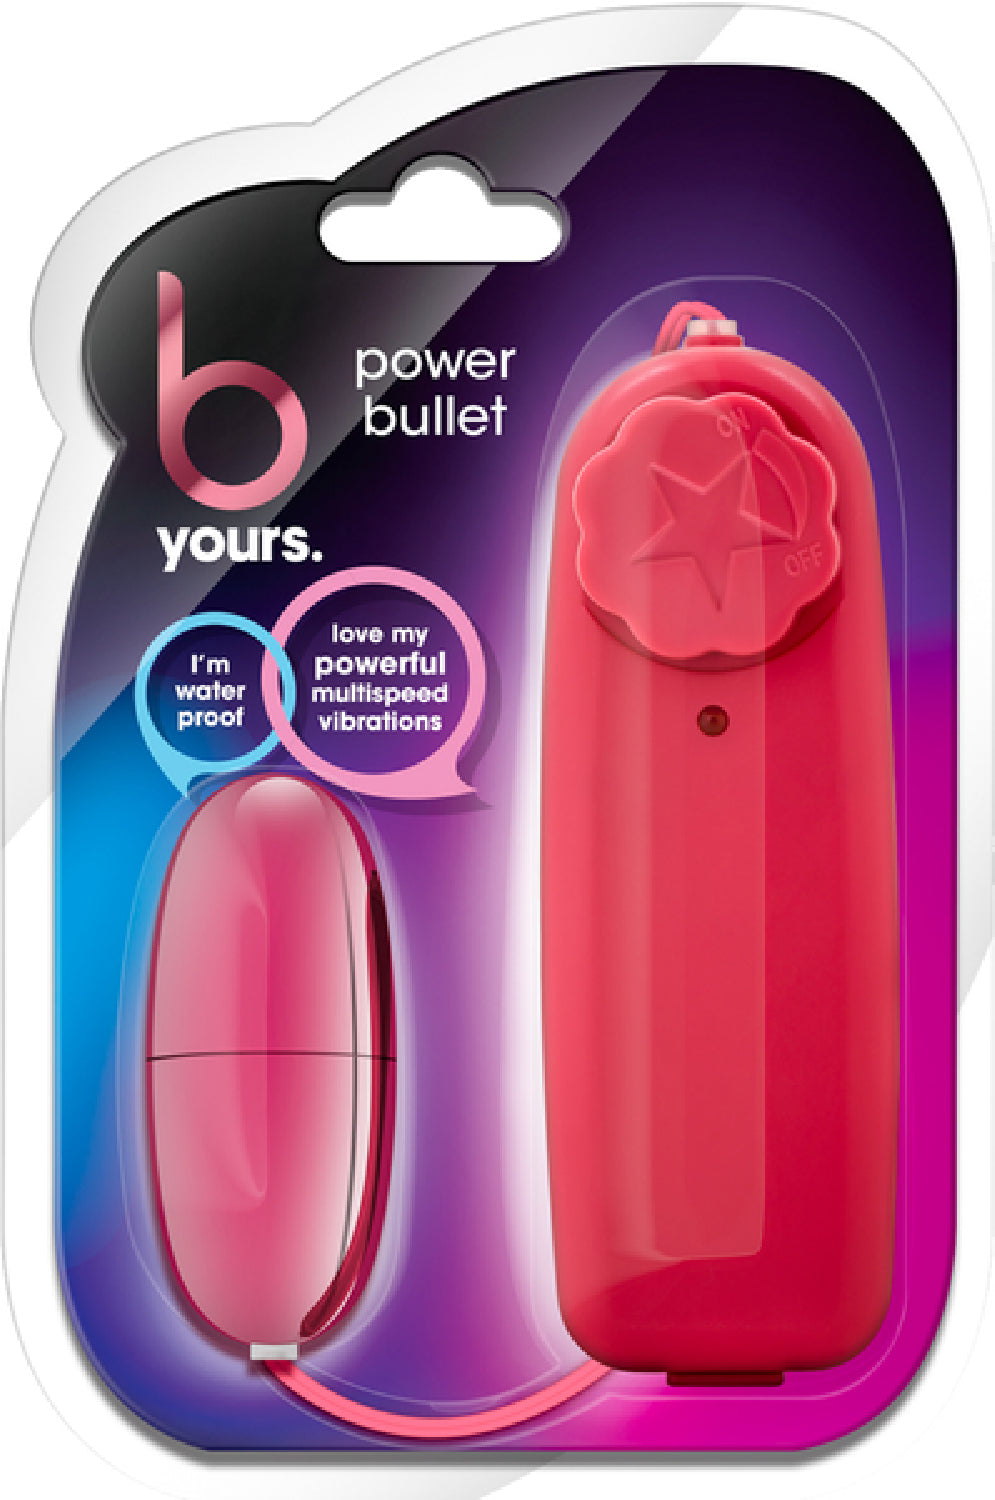 B Yours Power Bullet - Cerise